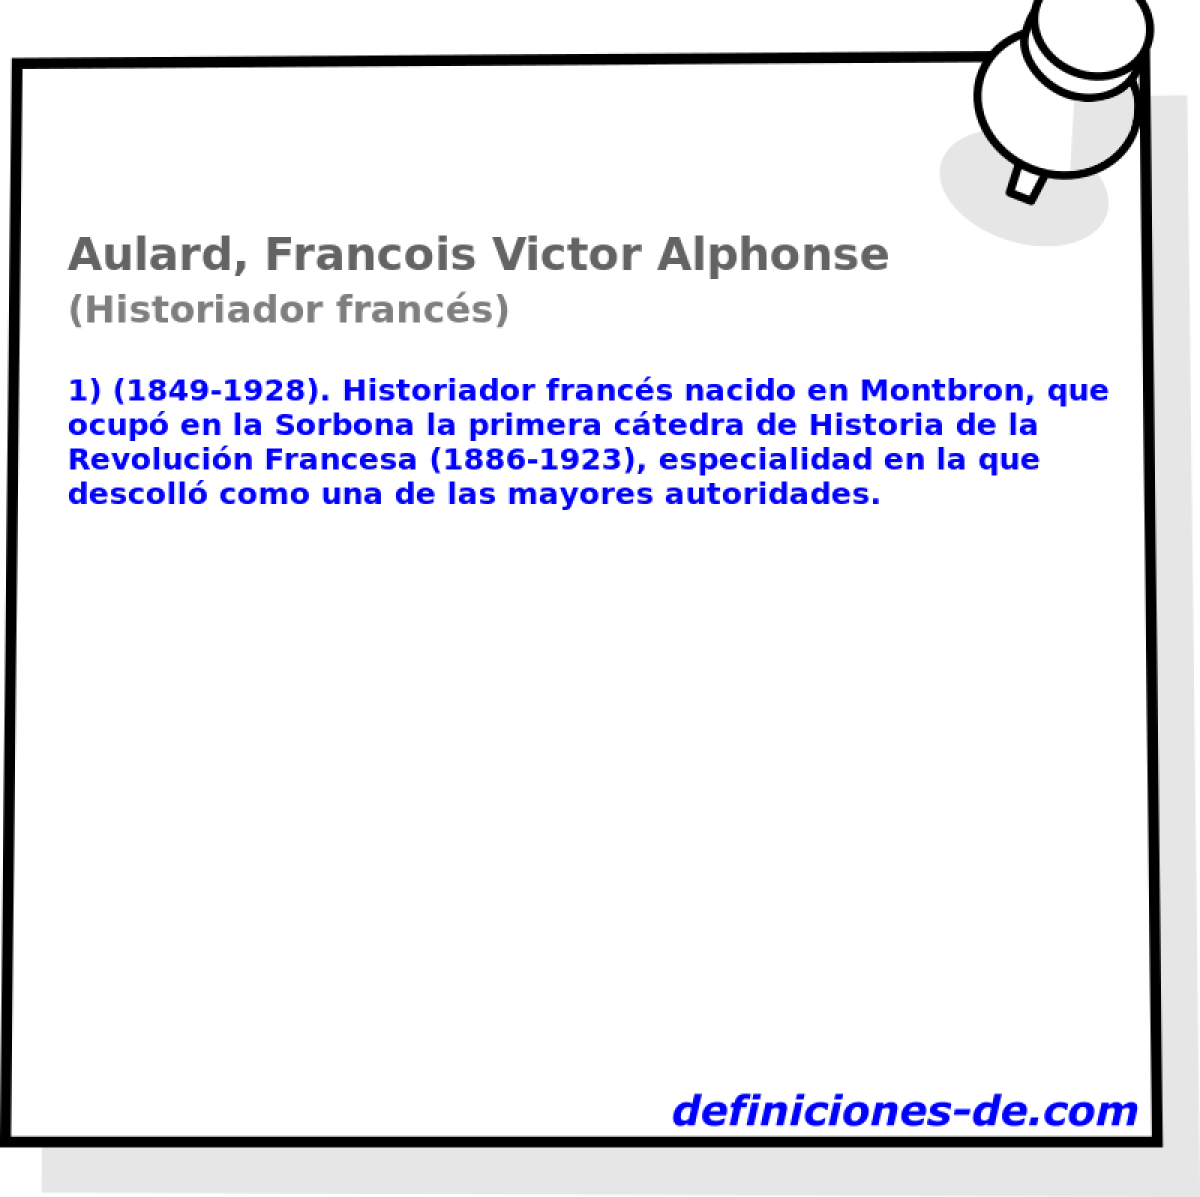 Aulard, Francois Victor Alphonse (Historiador francs)